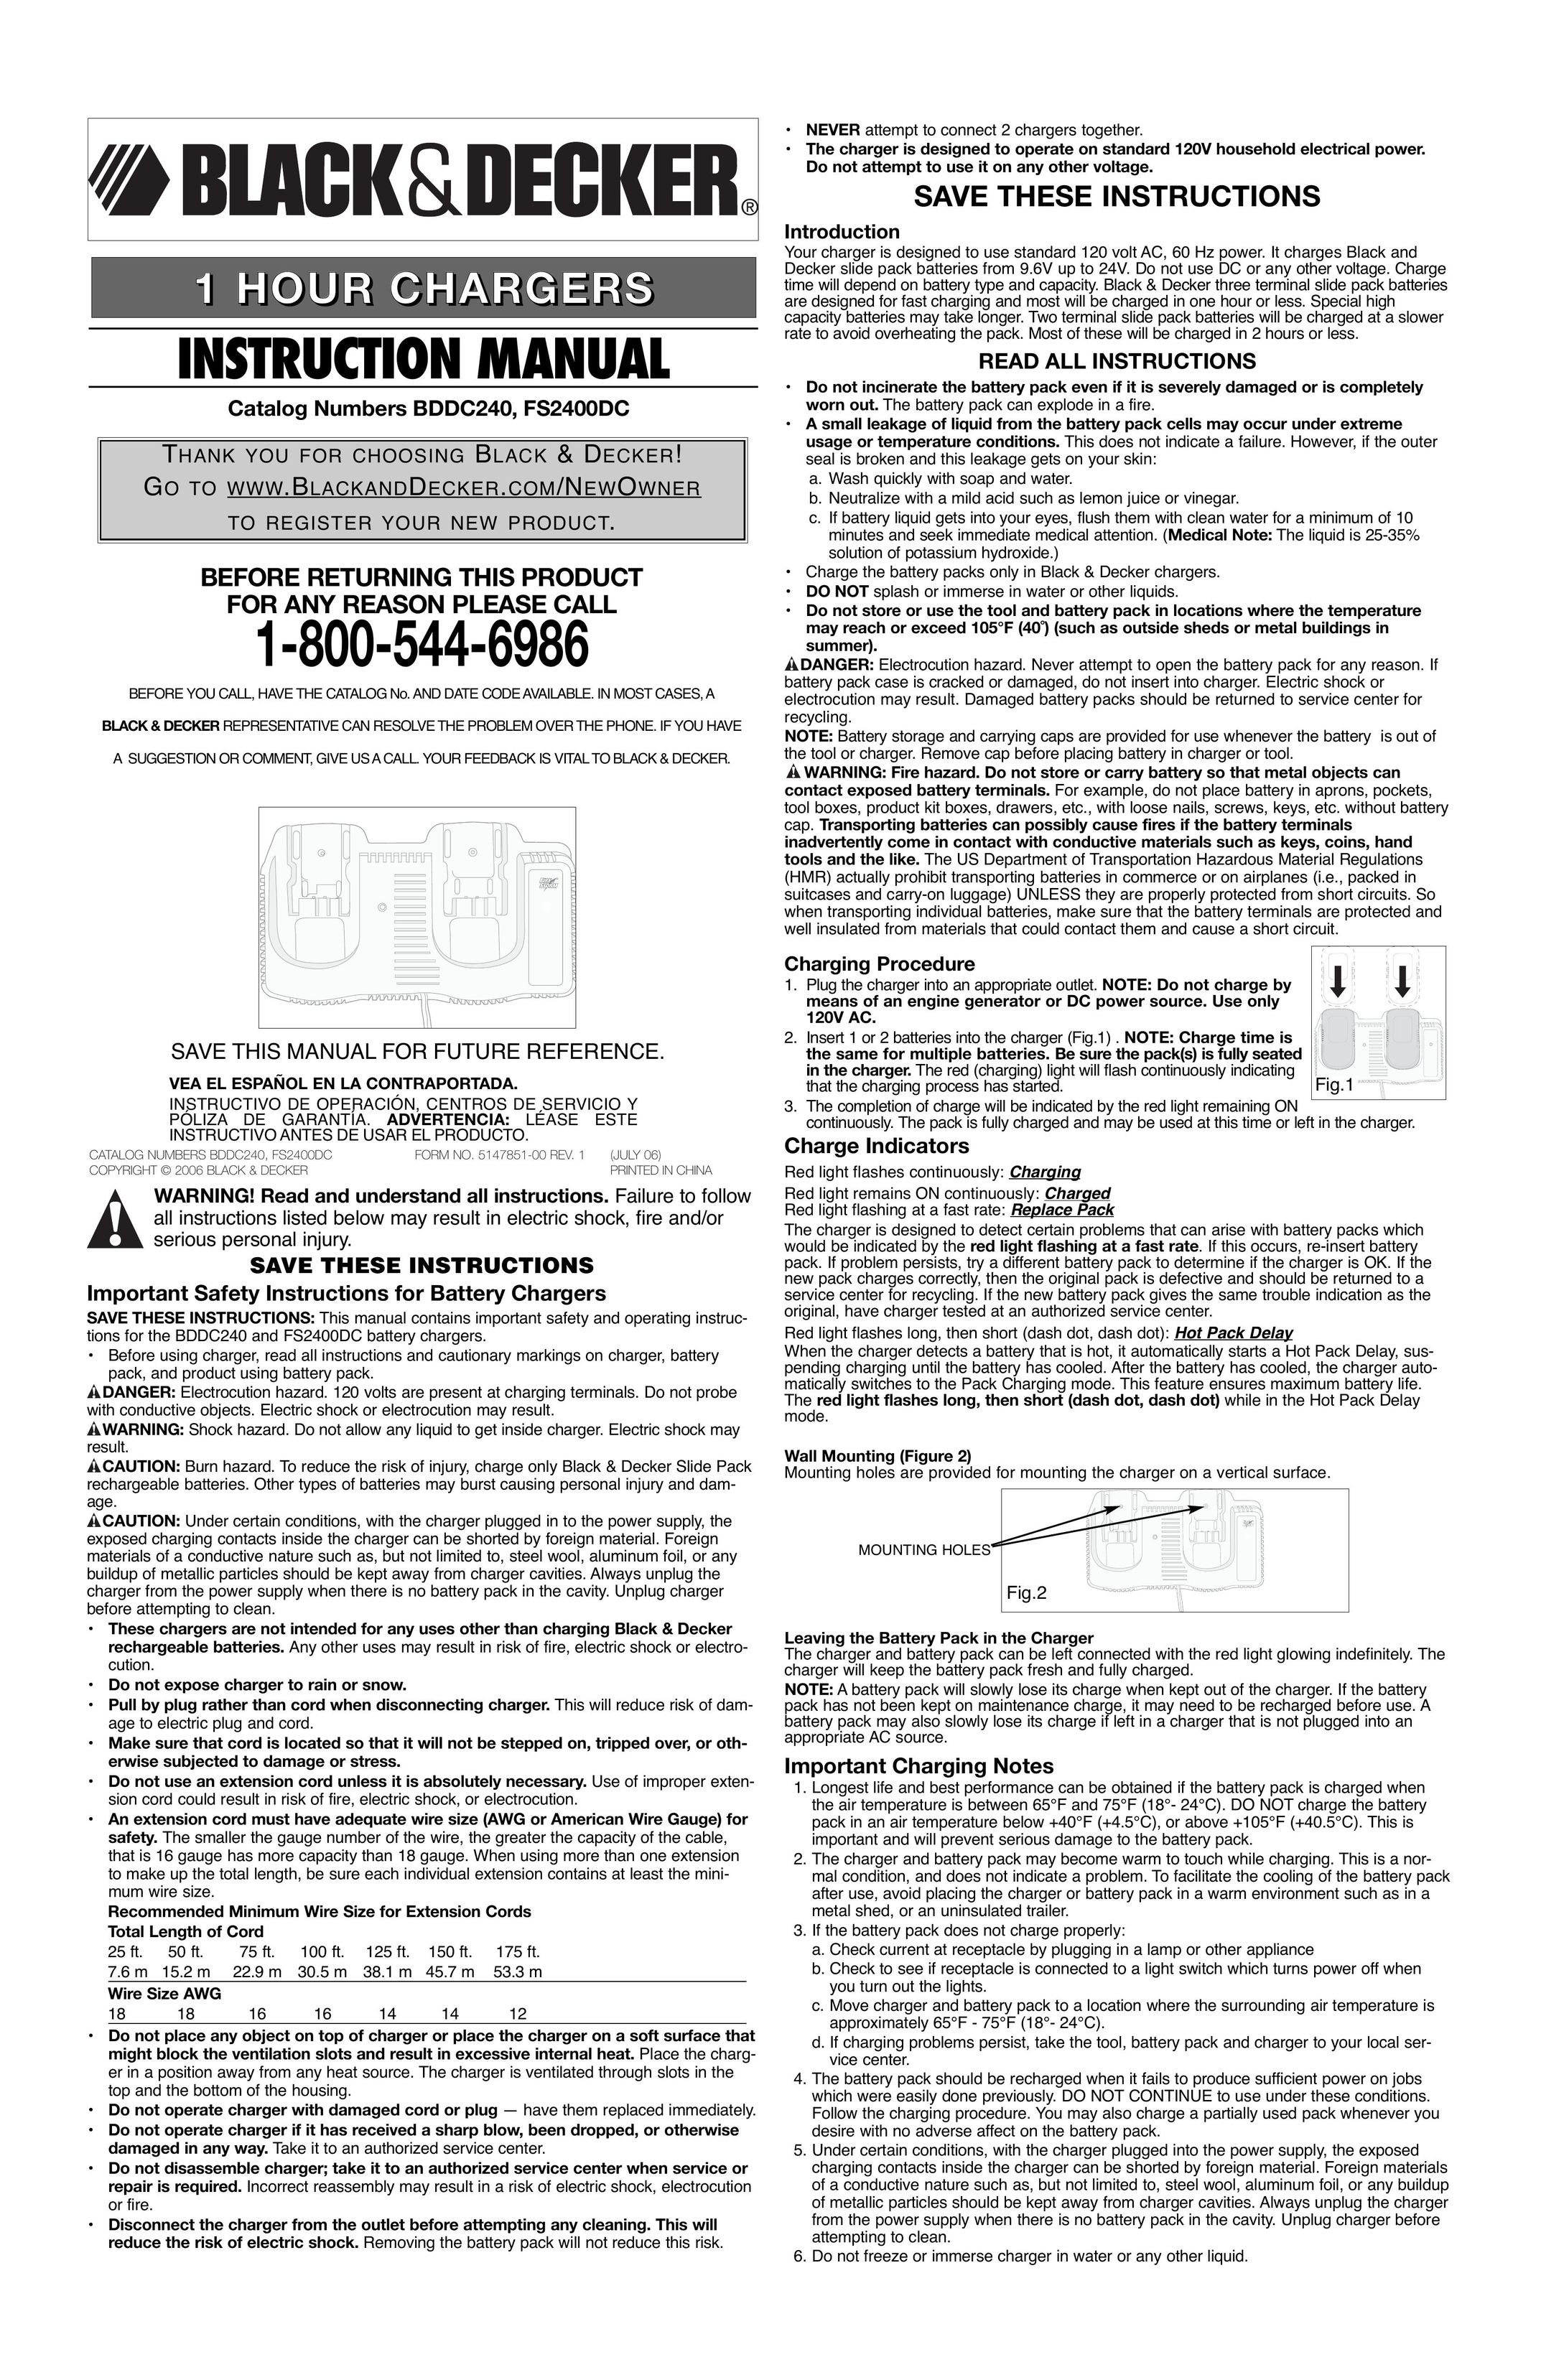 Black & Decker 5147851-00 Battery Charger User Manual